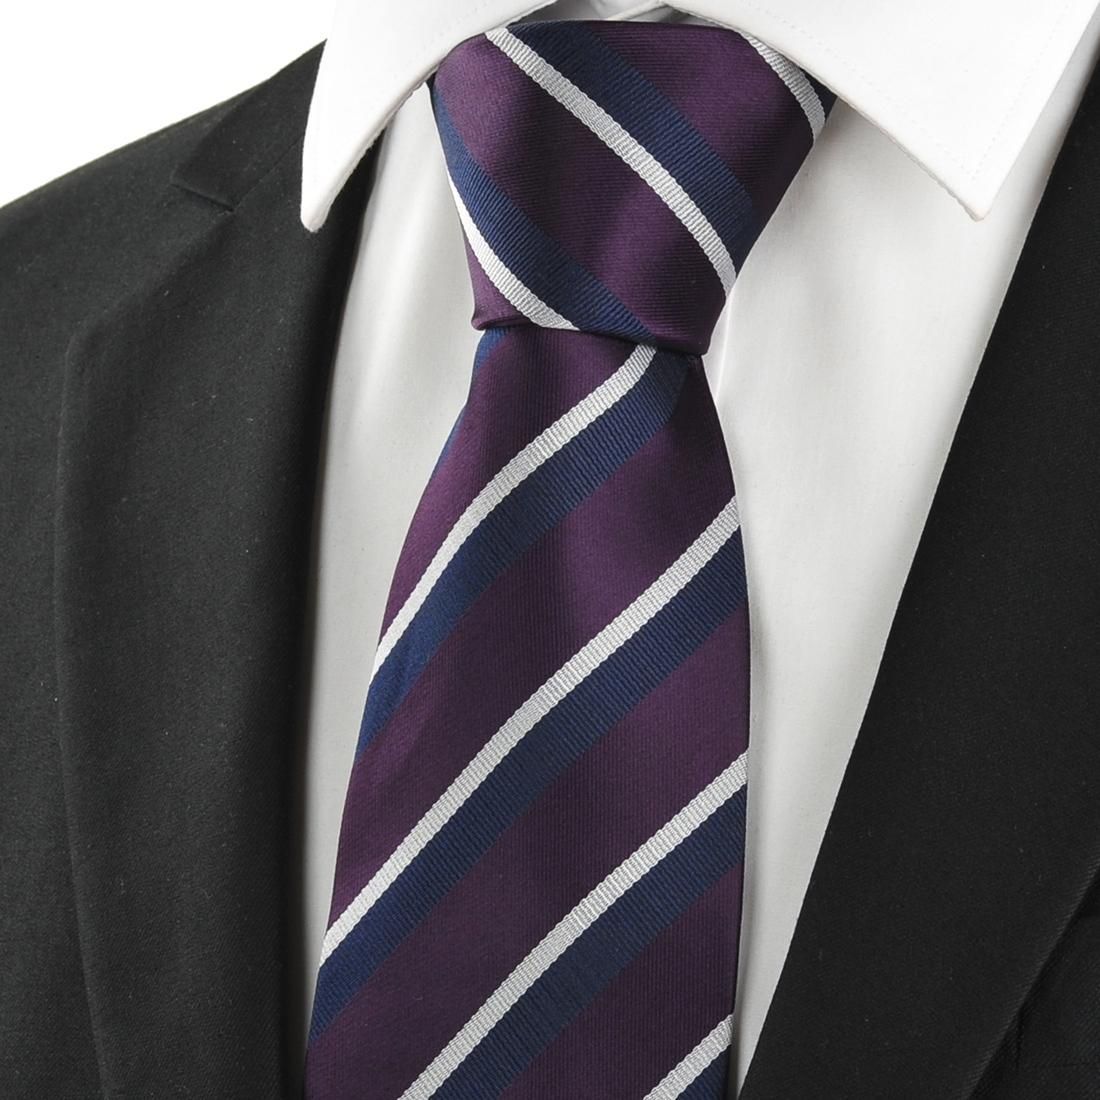 Dig Dog Bone Mens Tie Fashion Casual Small Tie Groom Wedding Purple Striped Tie Narrow Edition